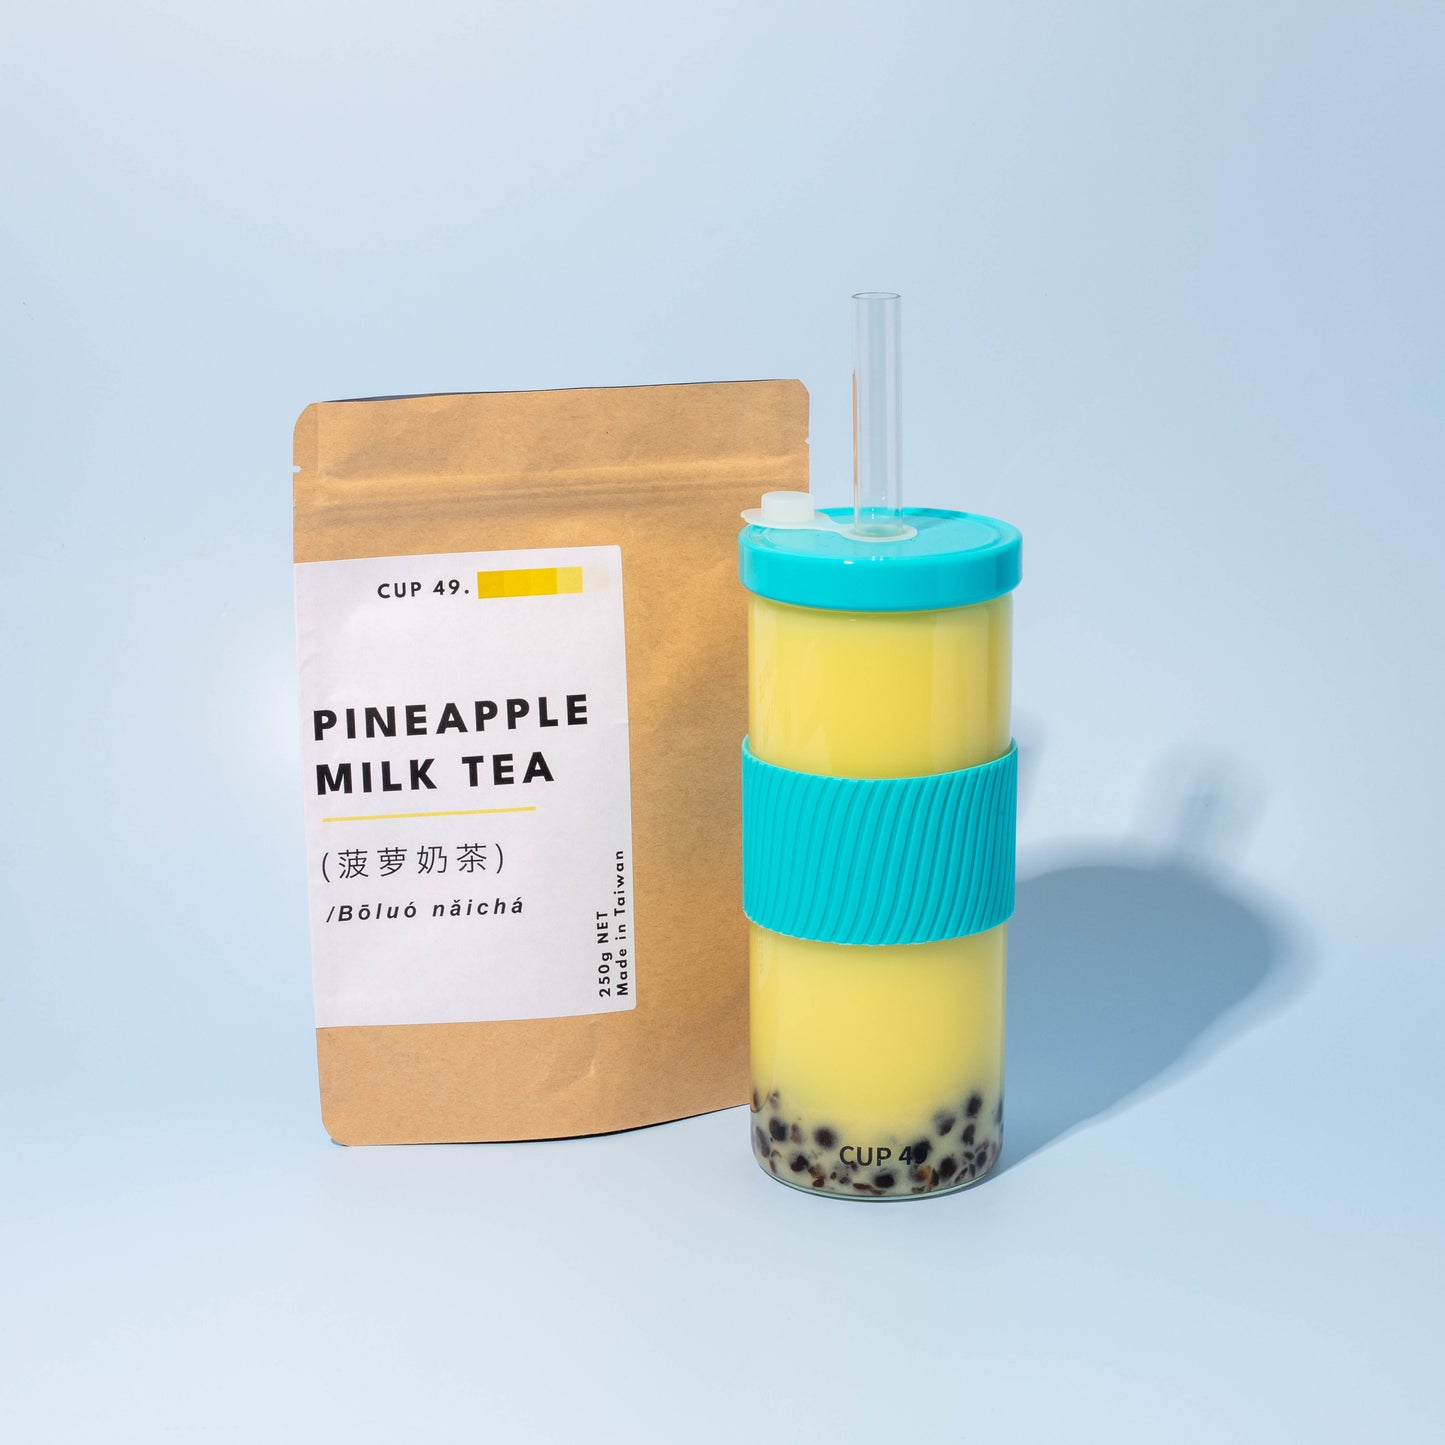 Cup 49 Pineapple Milk Tea Kit Buble Tea Boba